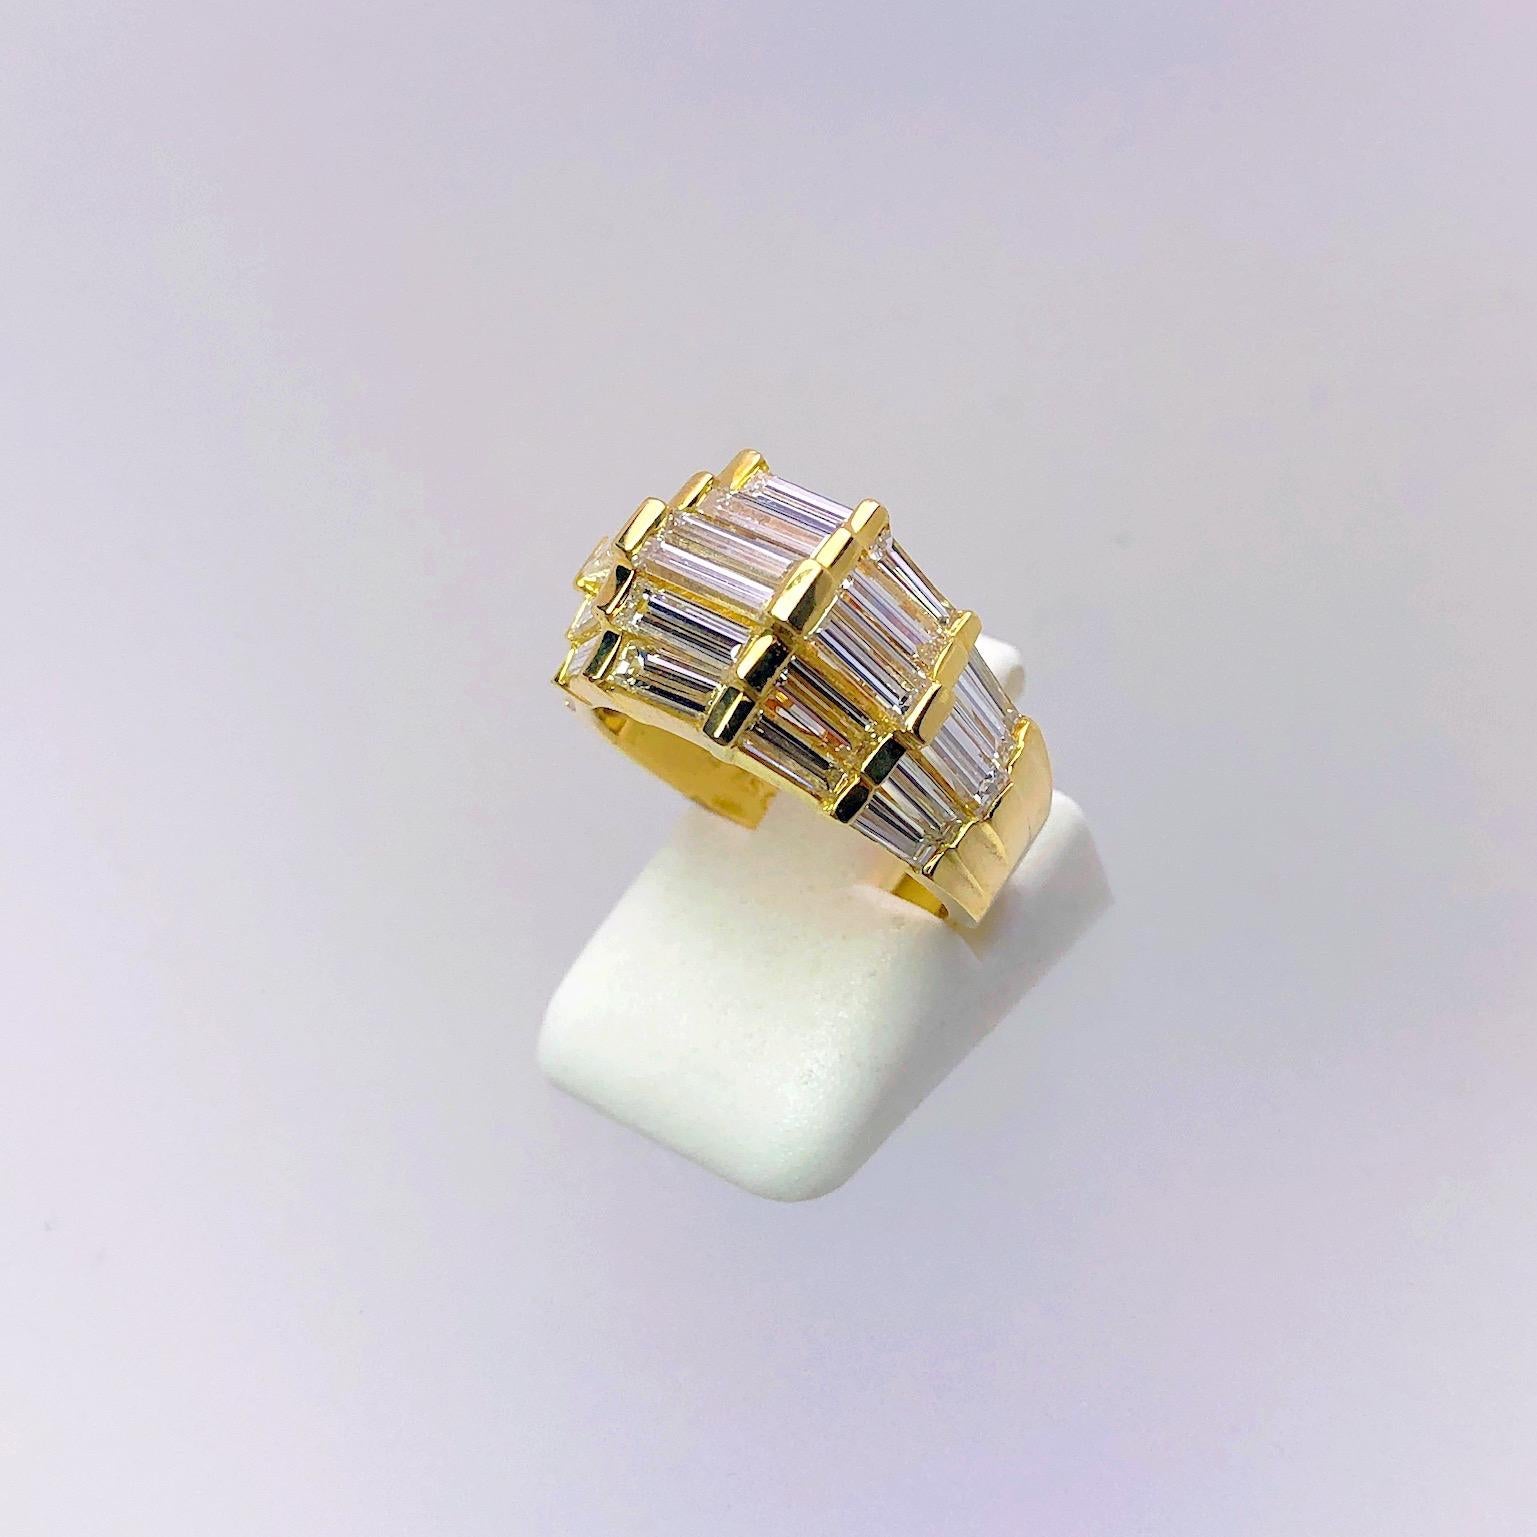 Nova 18 Karat Gelbgold und 4,35 Karat Diamant Baguette Ring (Baguetteschliff) im Angebot